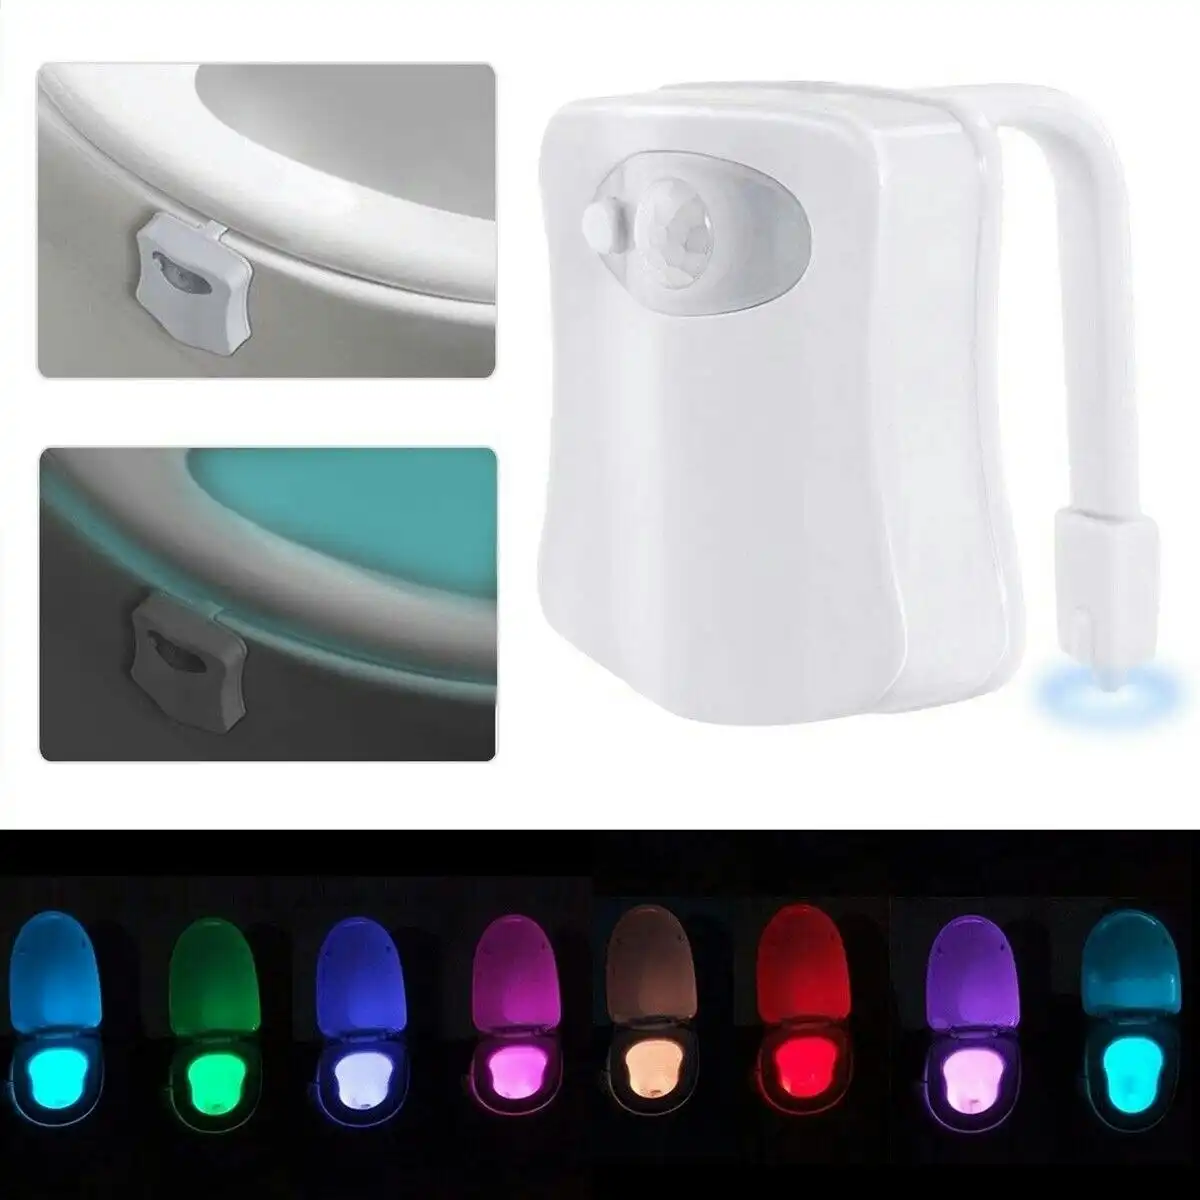 8 Colors Toilet Bowl LED Night Light Motion Activated Seat Sensor Lamp Bathroom